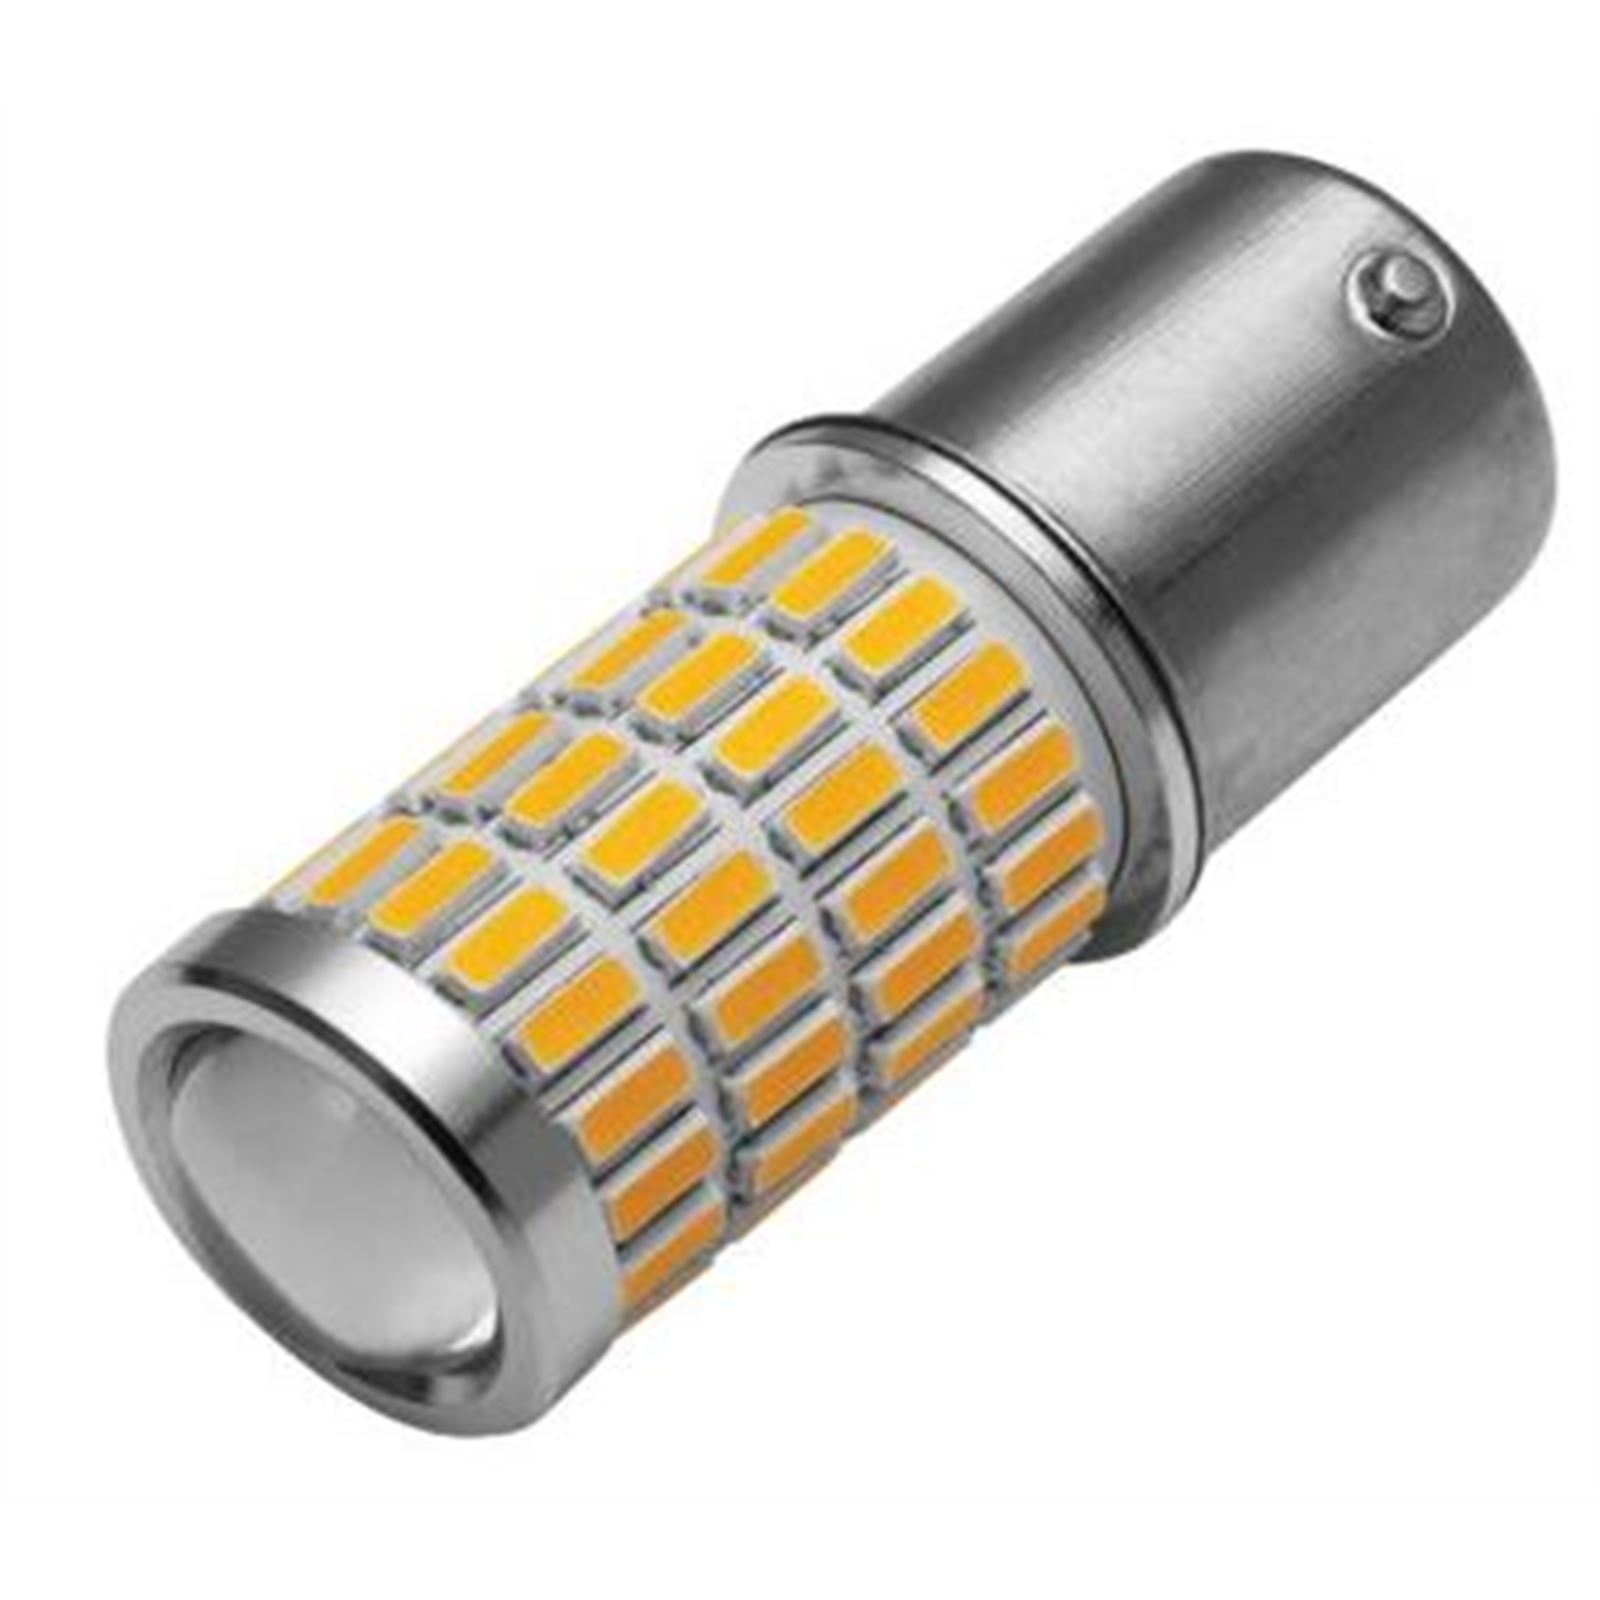 Kuryakyn High-Intensity LED Bulbs PY21W, Amber